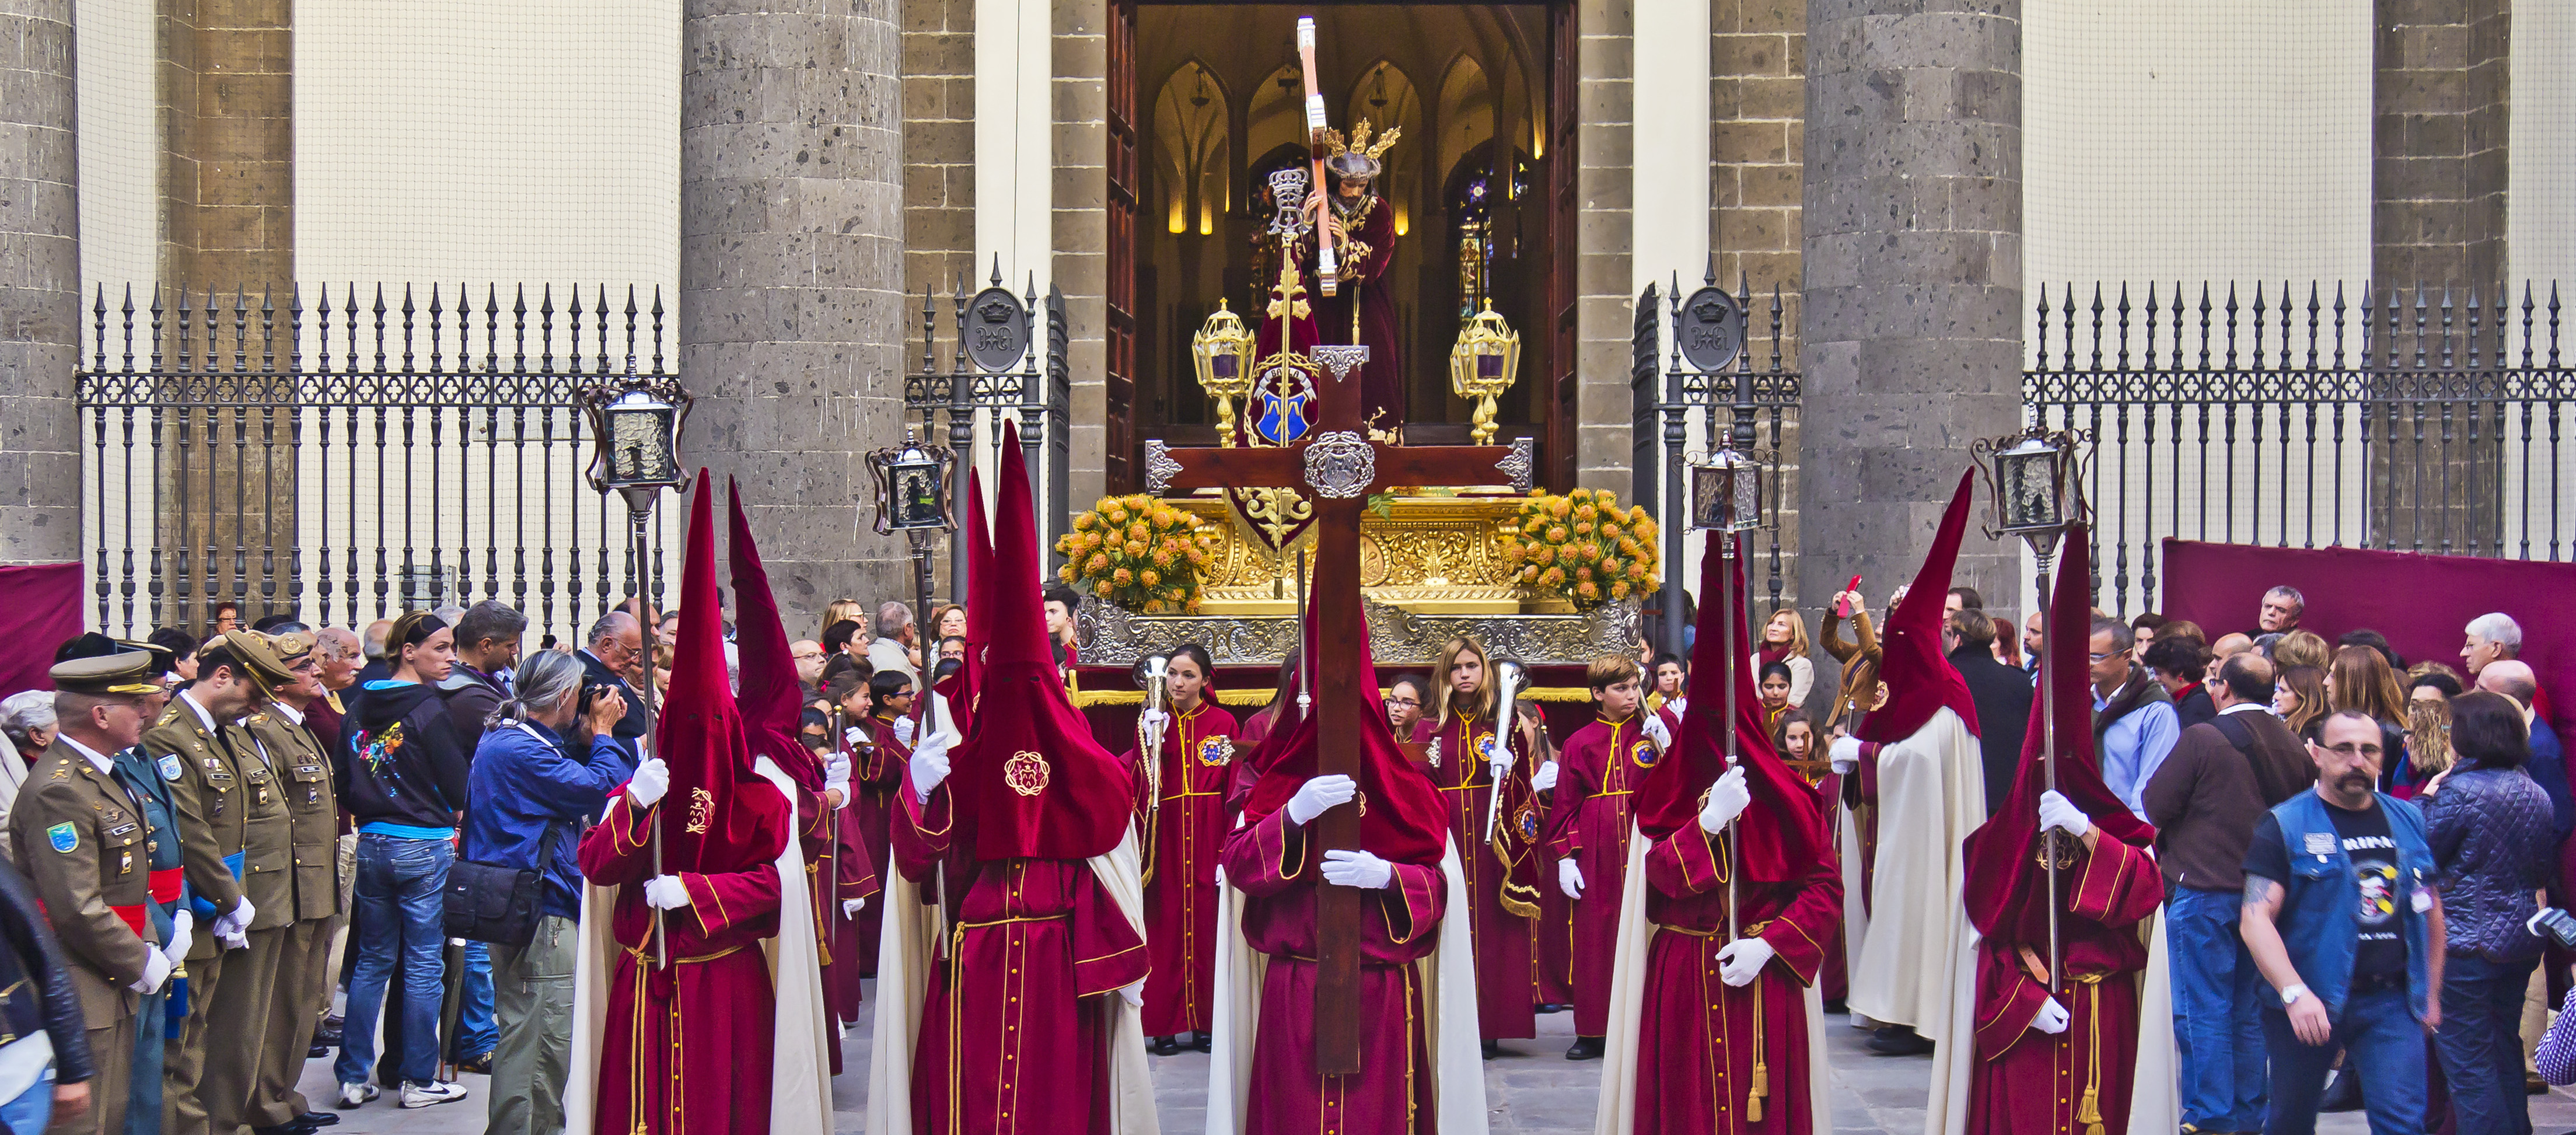 Holy Week in Spain - Wikipedia